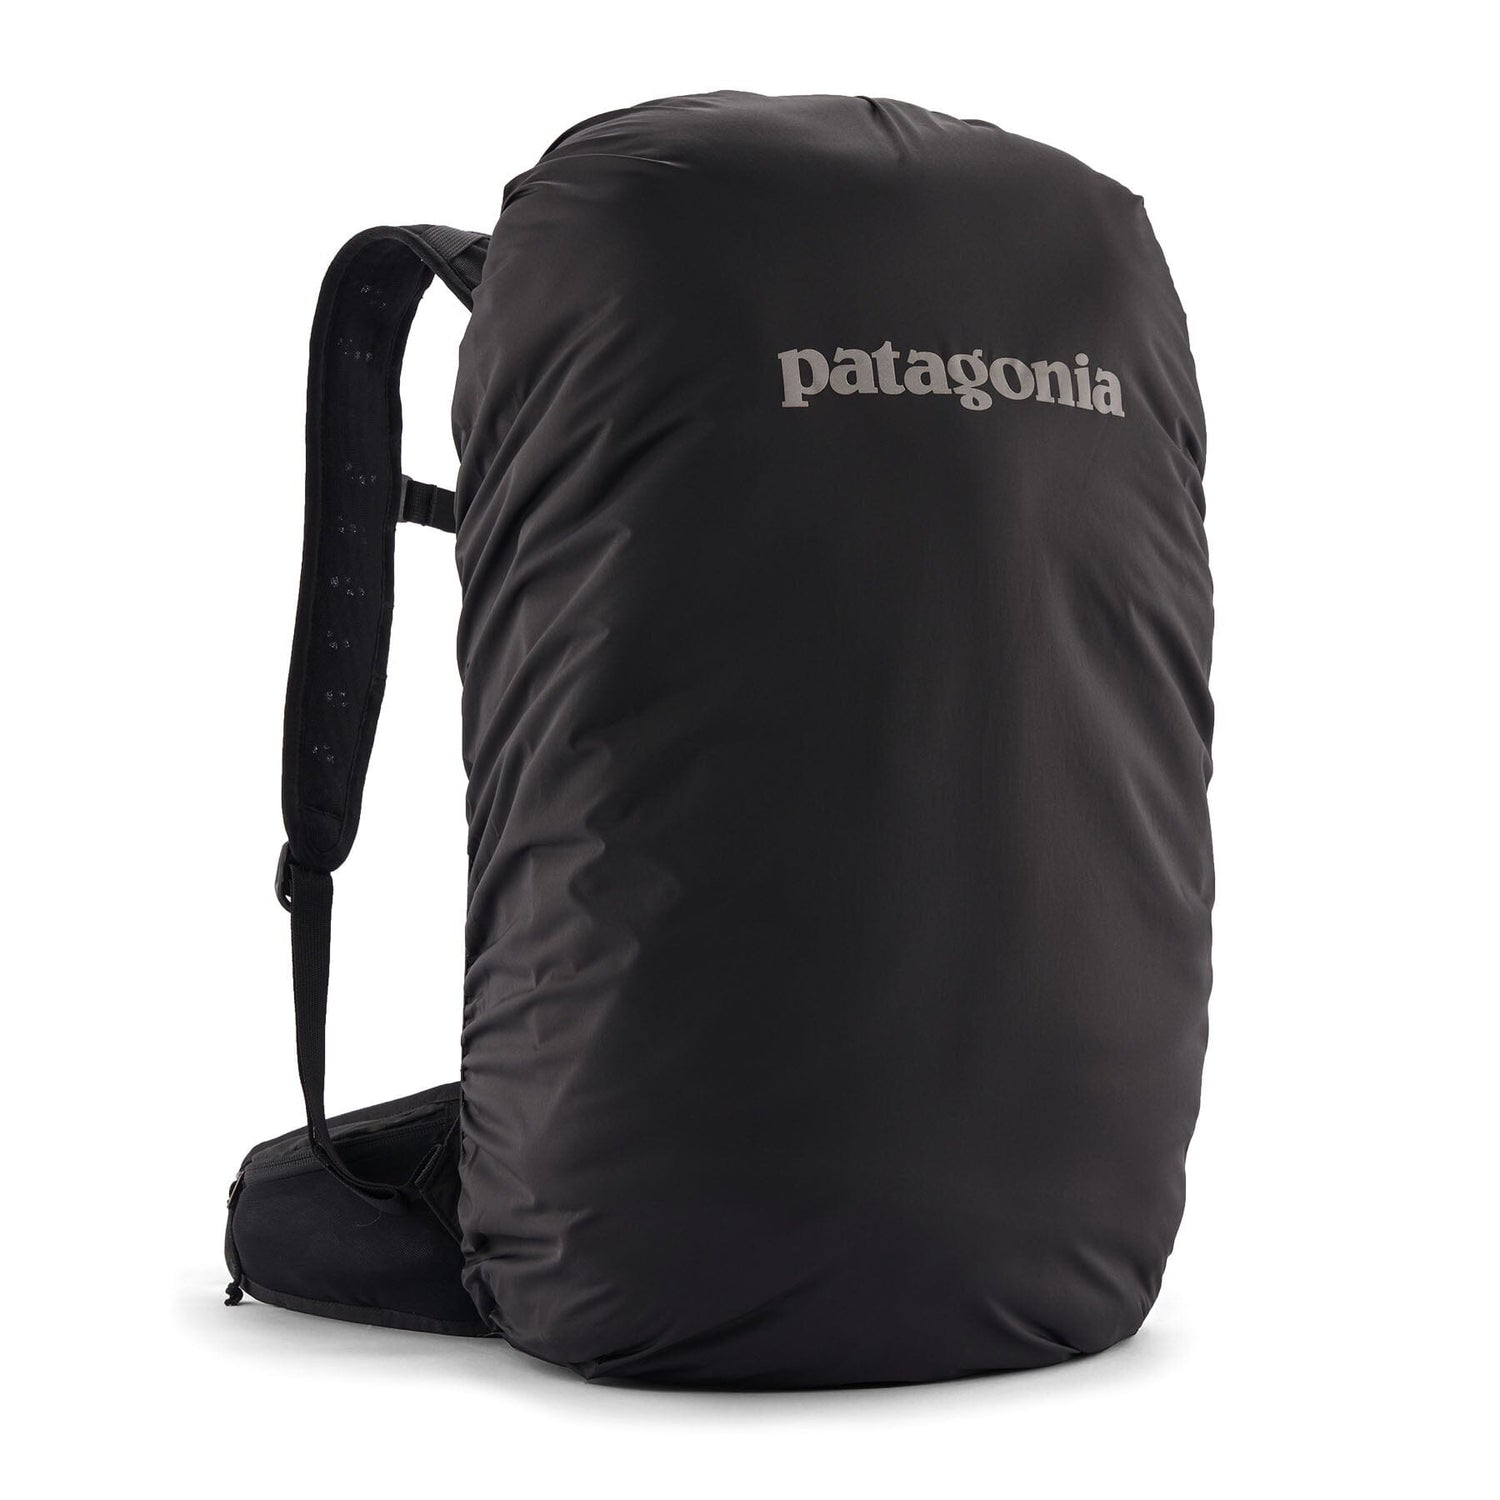 Patagonia Terravia Pack 28L - 100% Recycled Nylon Black Bags